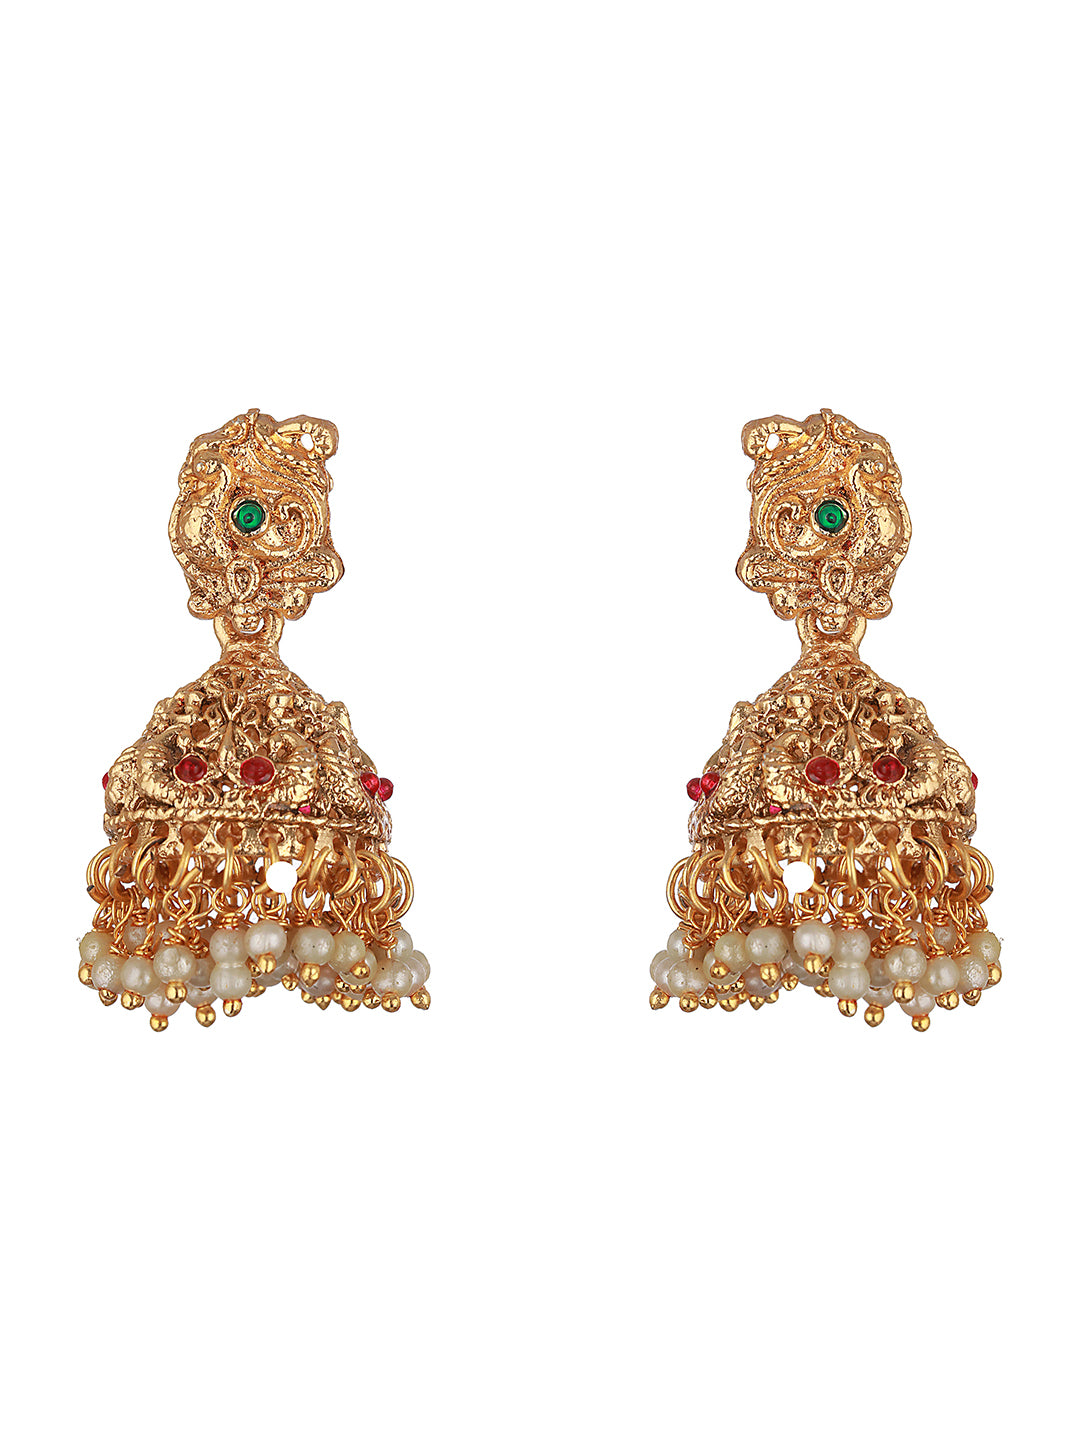 Gold Mango Pearl Drops Temple Lakshmi Devi Haram Necklace  Jewellery Set